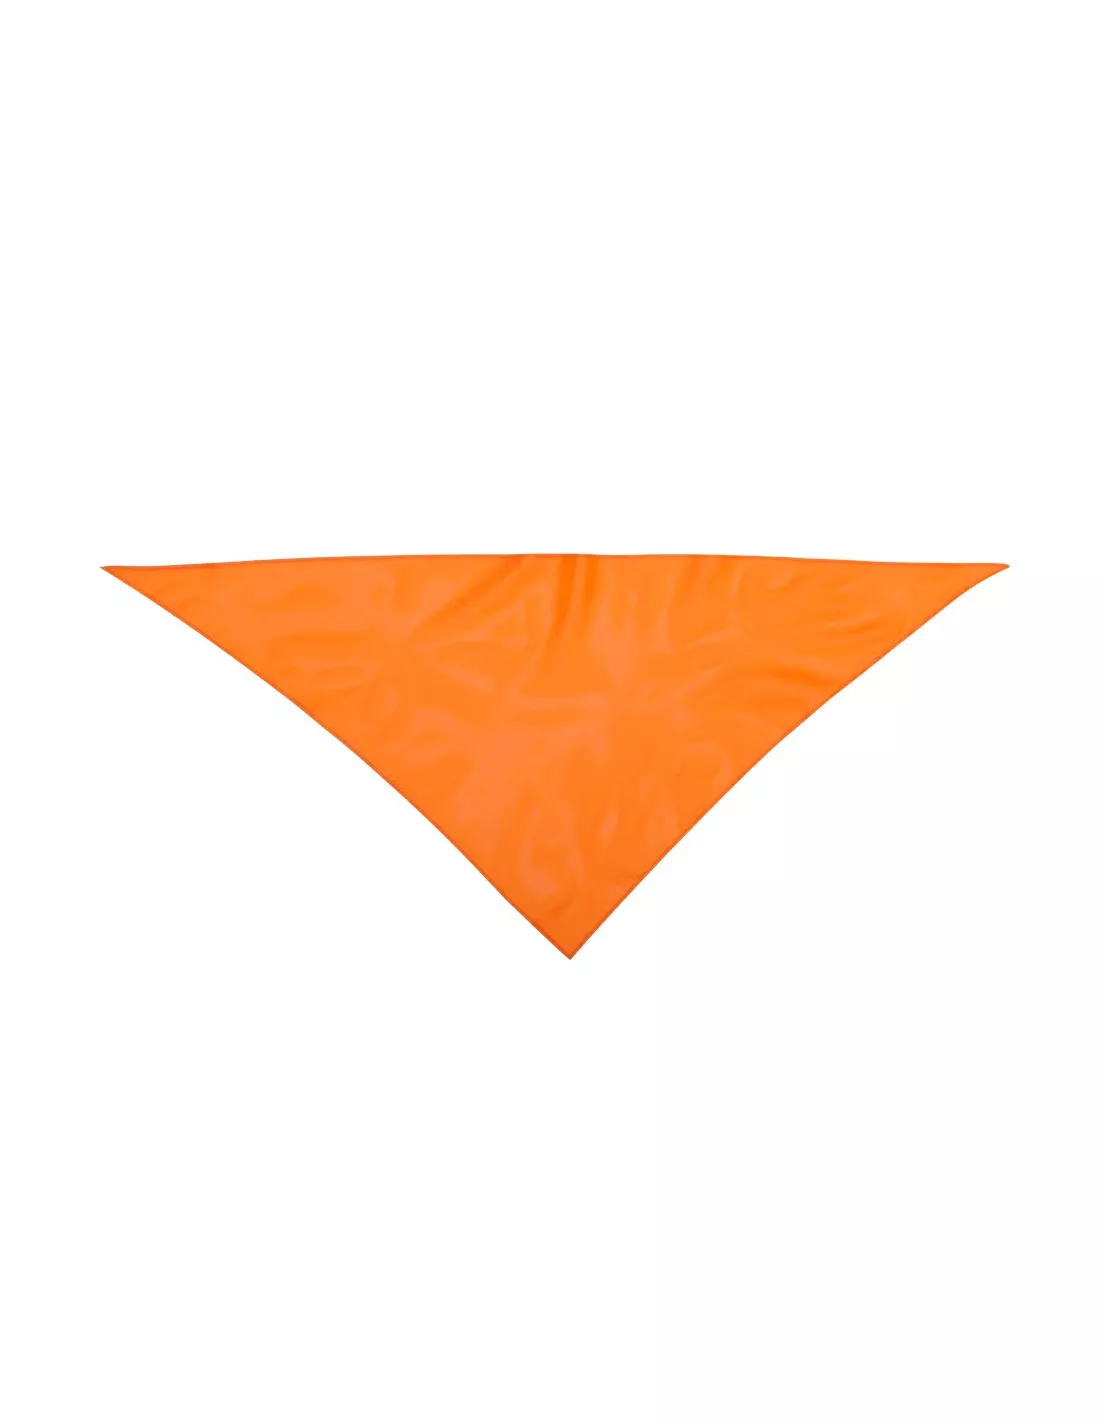 Pañoleta Triangular Personalizada de color naranja